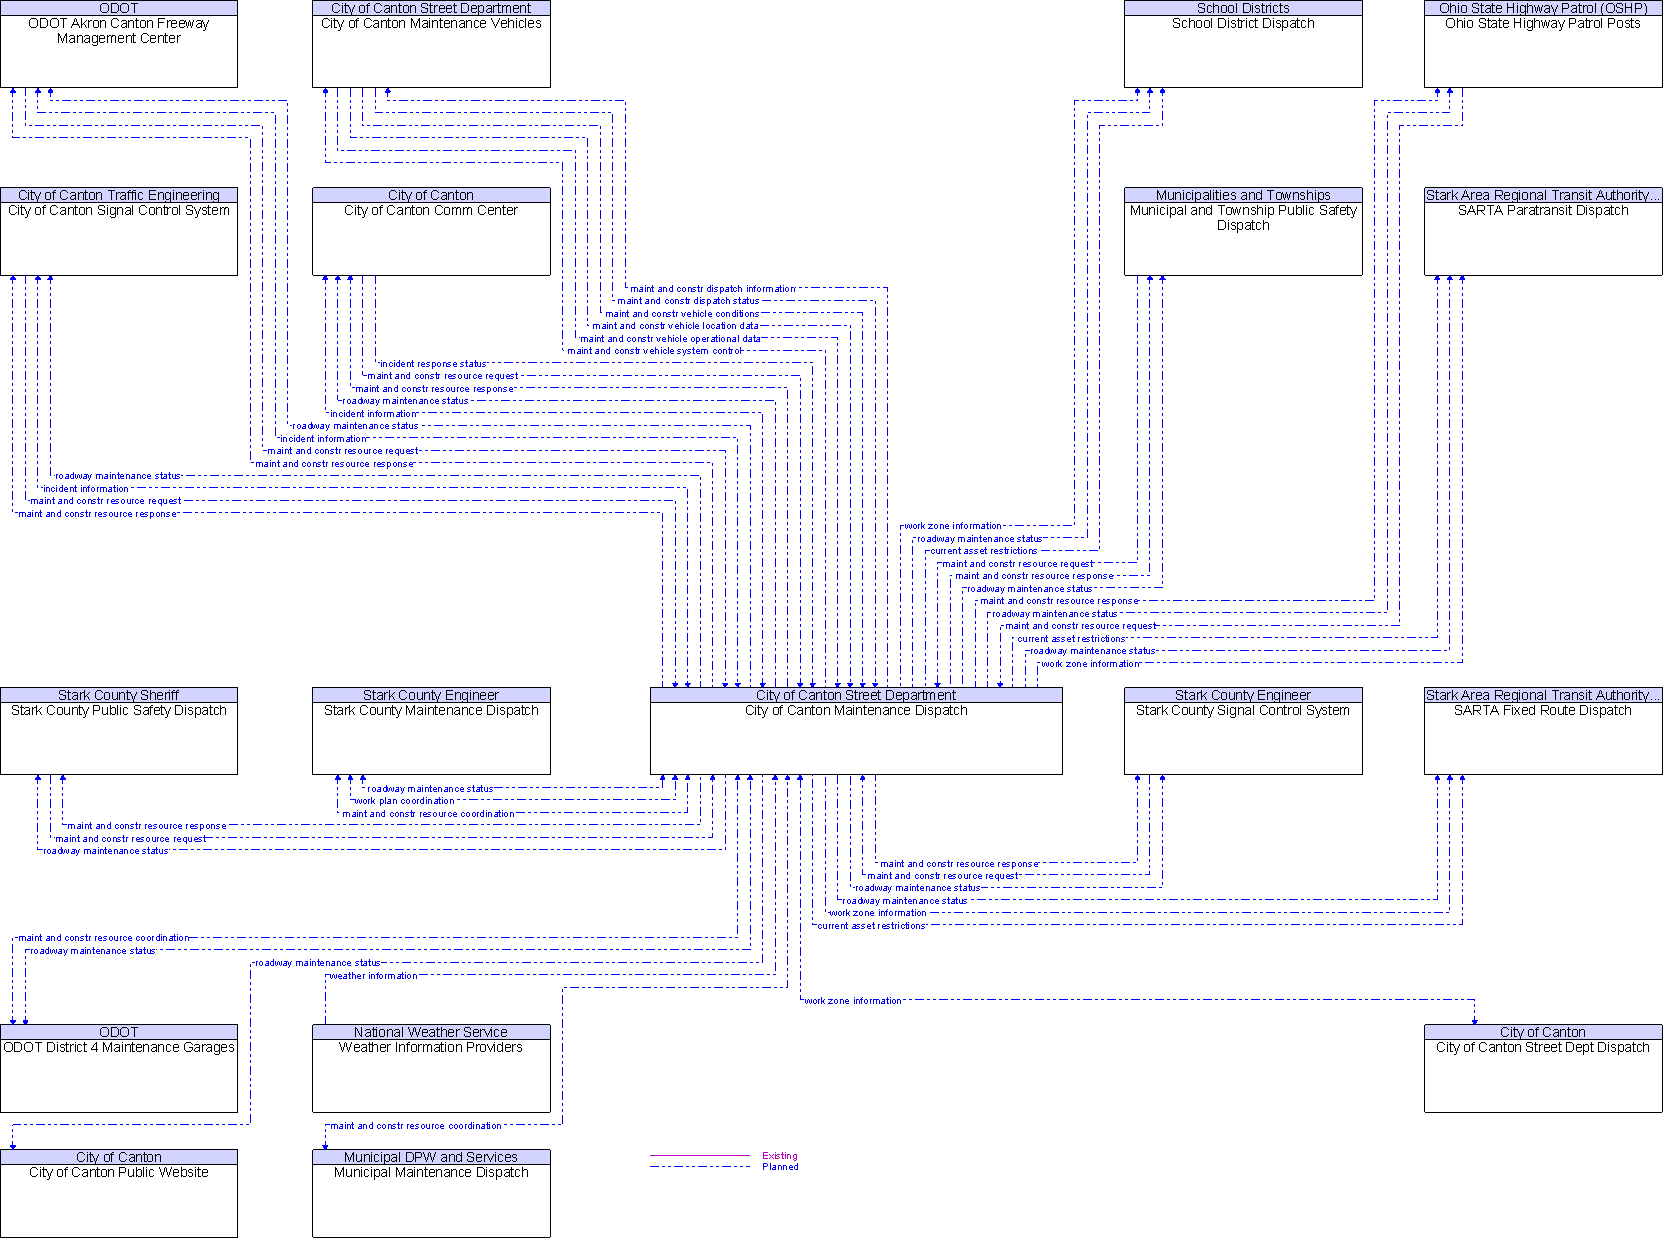 Context Diagram for City of Canton Maintenance Dispatch